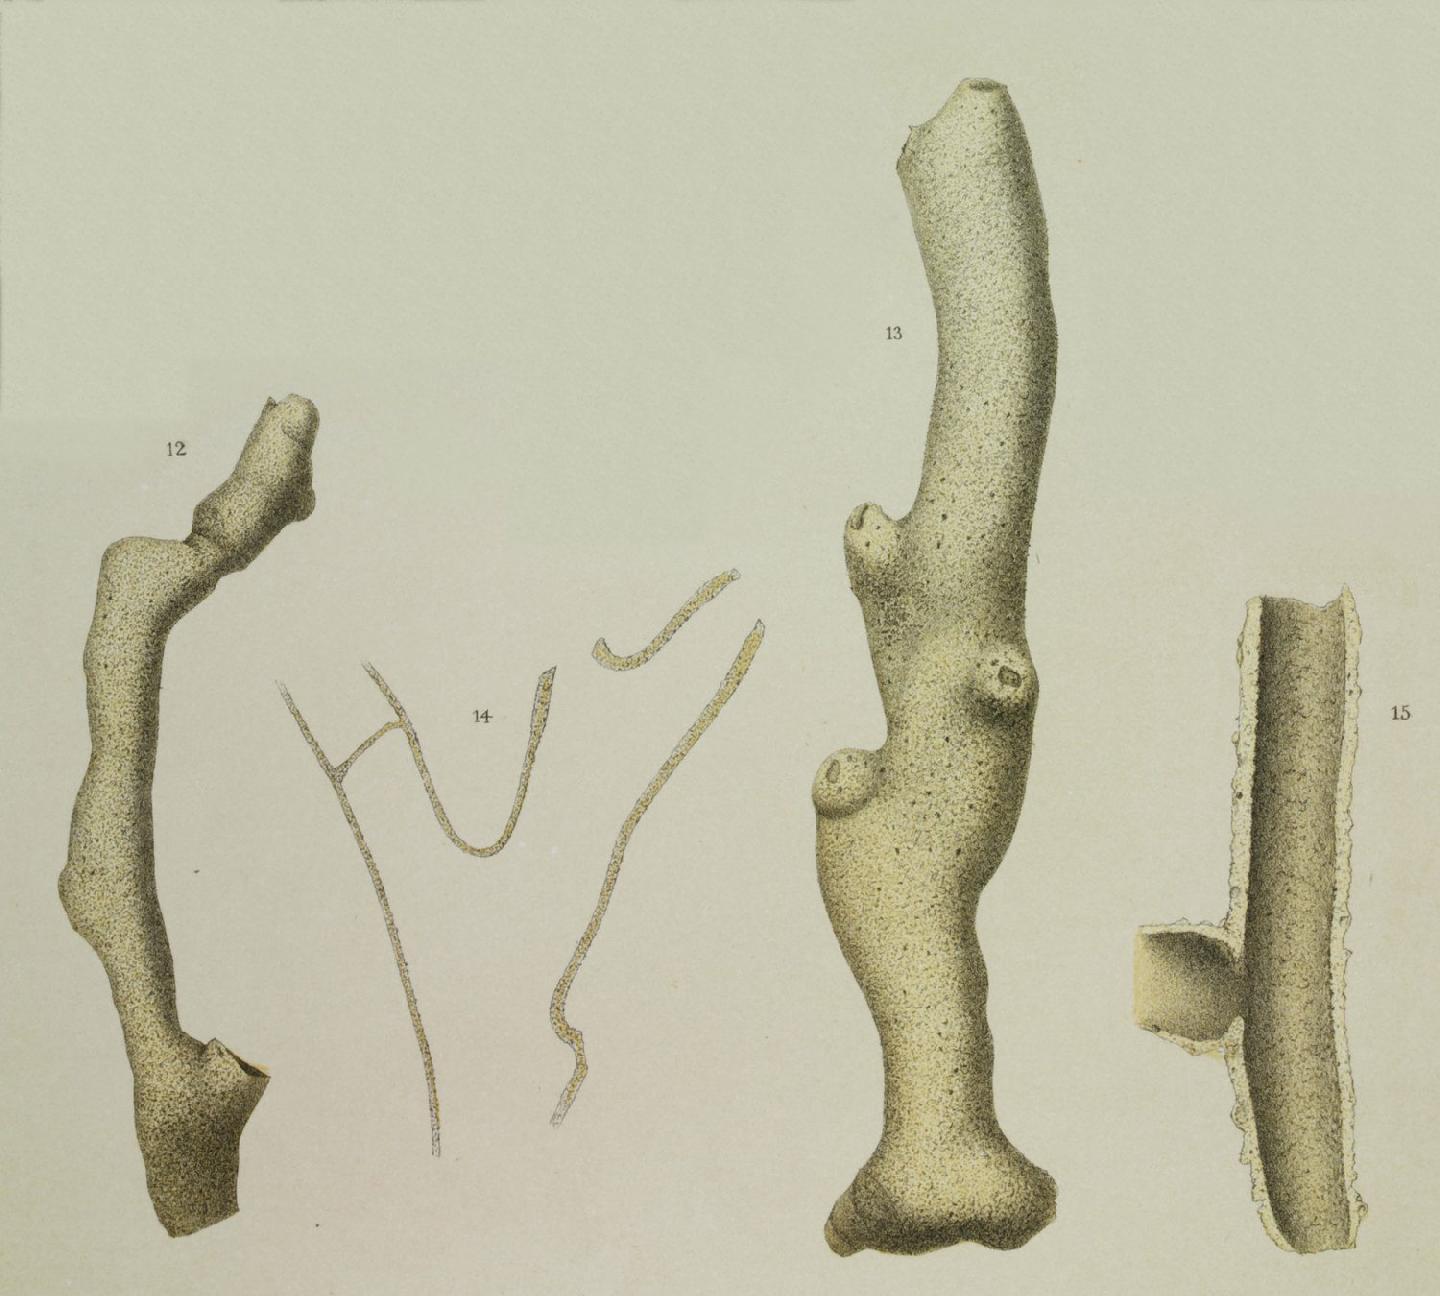 To NHMUK collection (Aschemonella ramuliformis Brady, 1884; Syntype; NHMUK:ecatalogue:3091927)